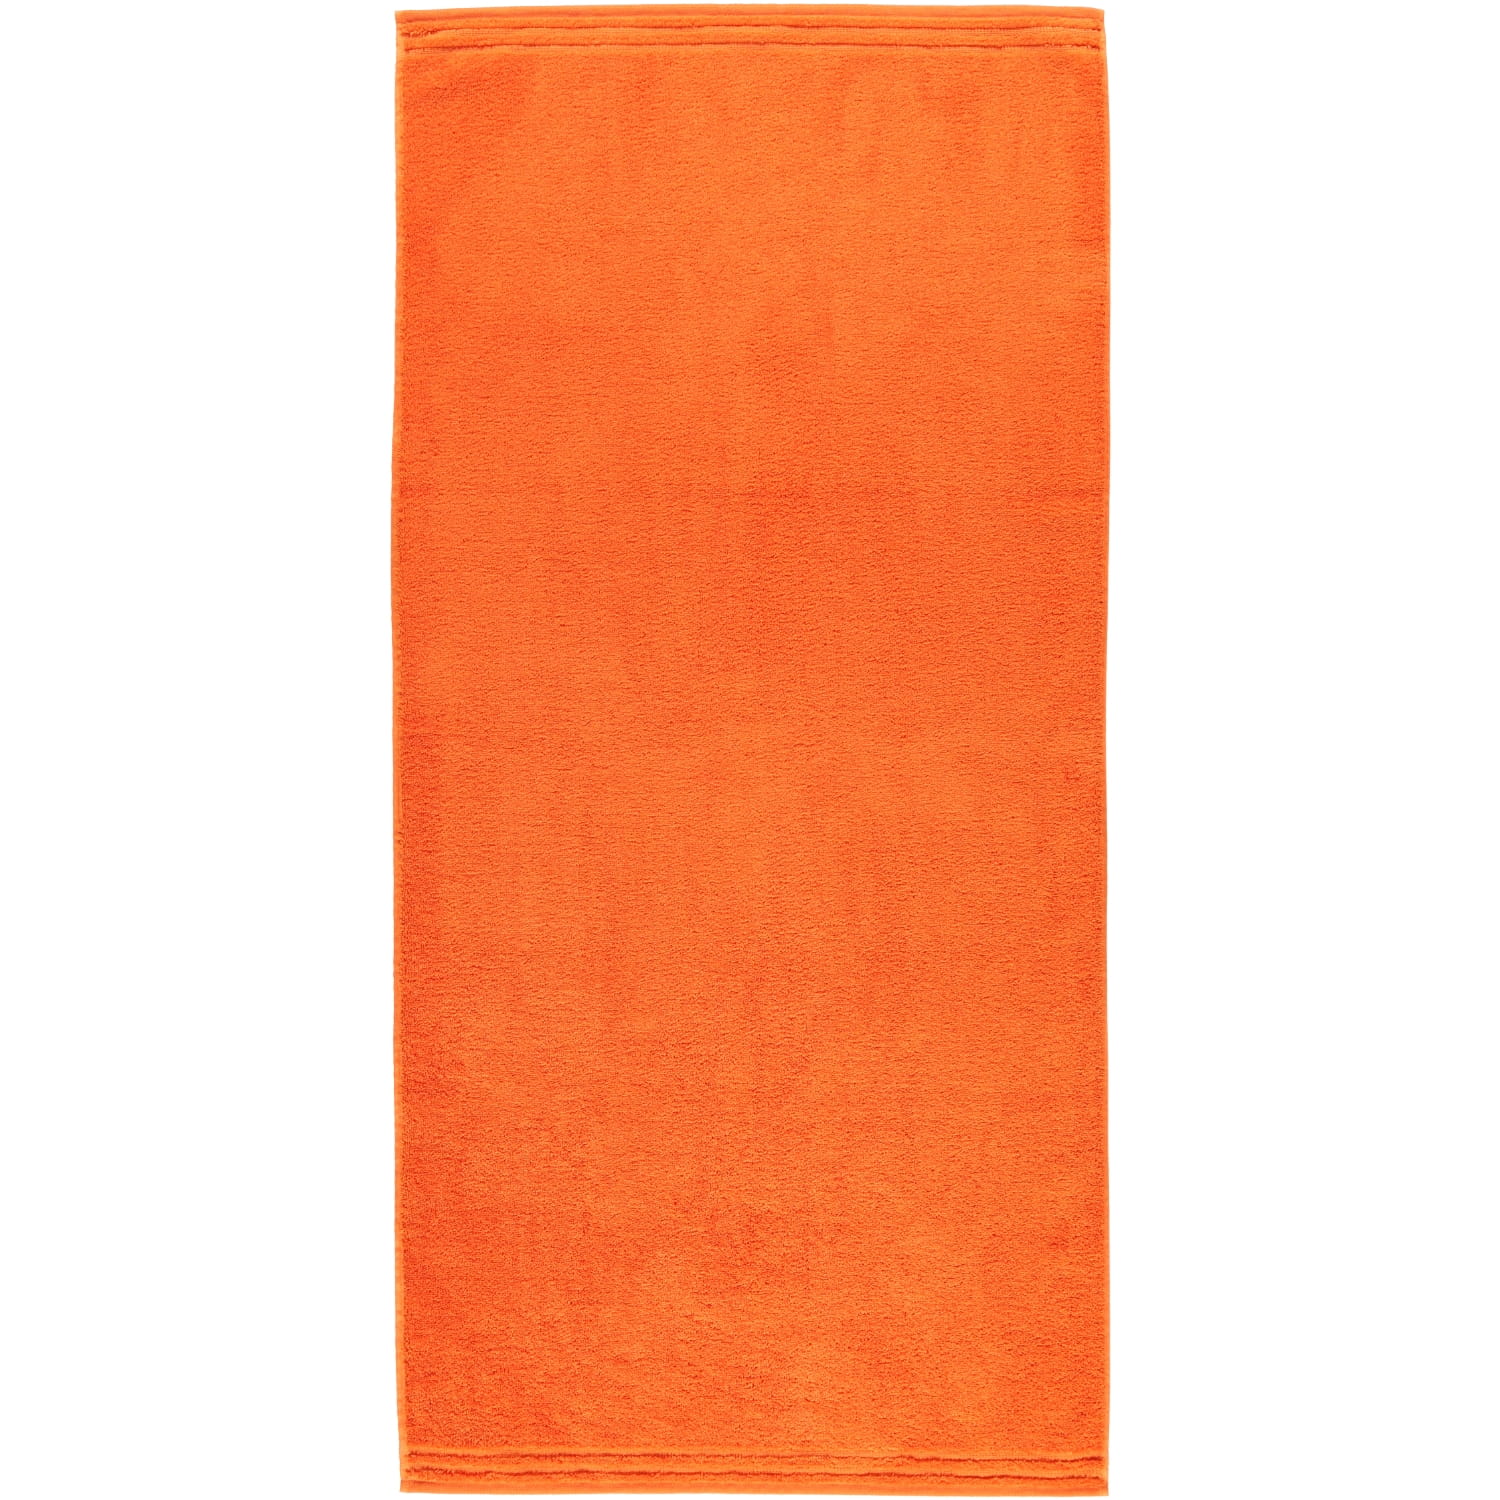 Vossen Calypso Feeling - Marken - Farbe: orange | | 255 Handtücher Vossen | Vossen